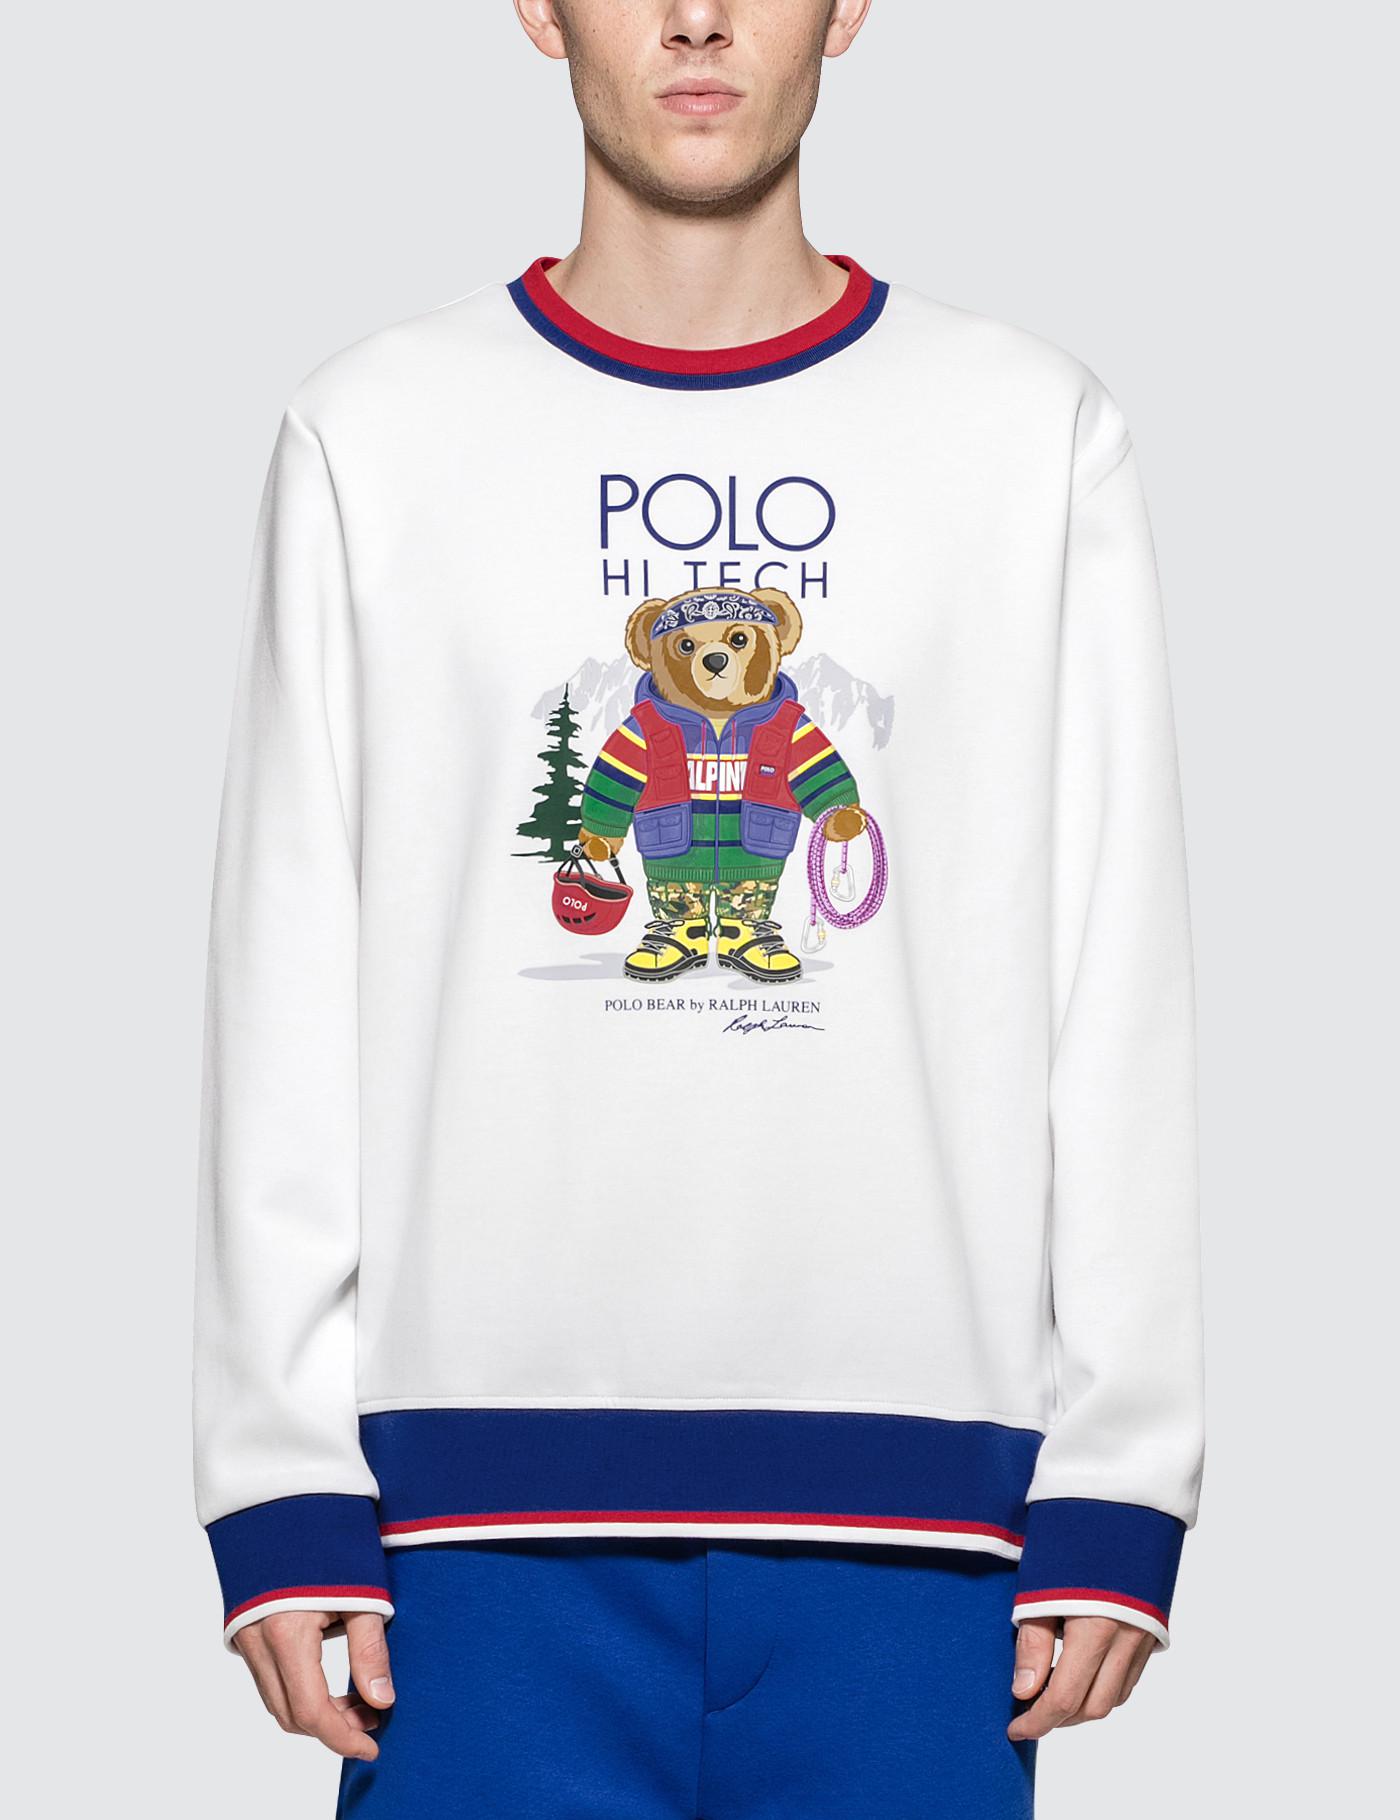 hi tech polo sweater